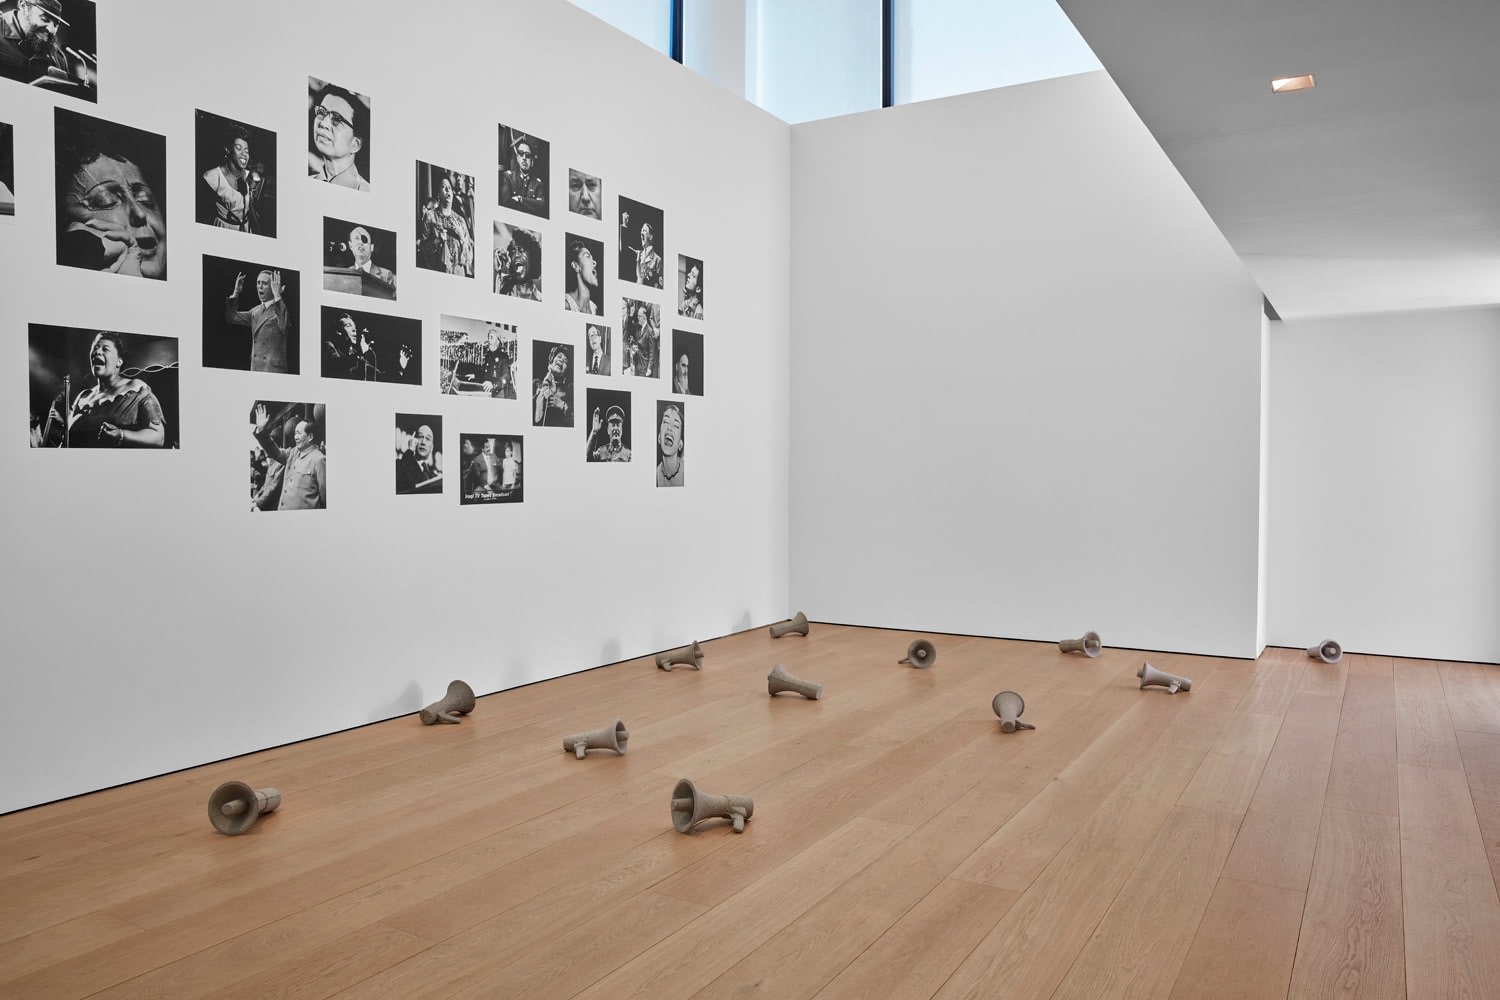 Kader Attia,&nbsp;Mirrors of Emotion, Installation view, Lehmann Maupin, New York